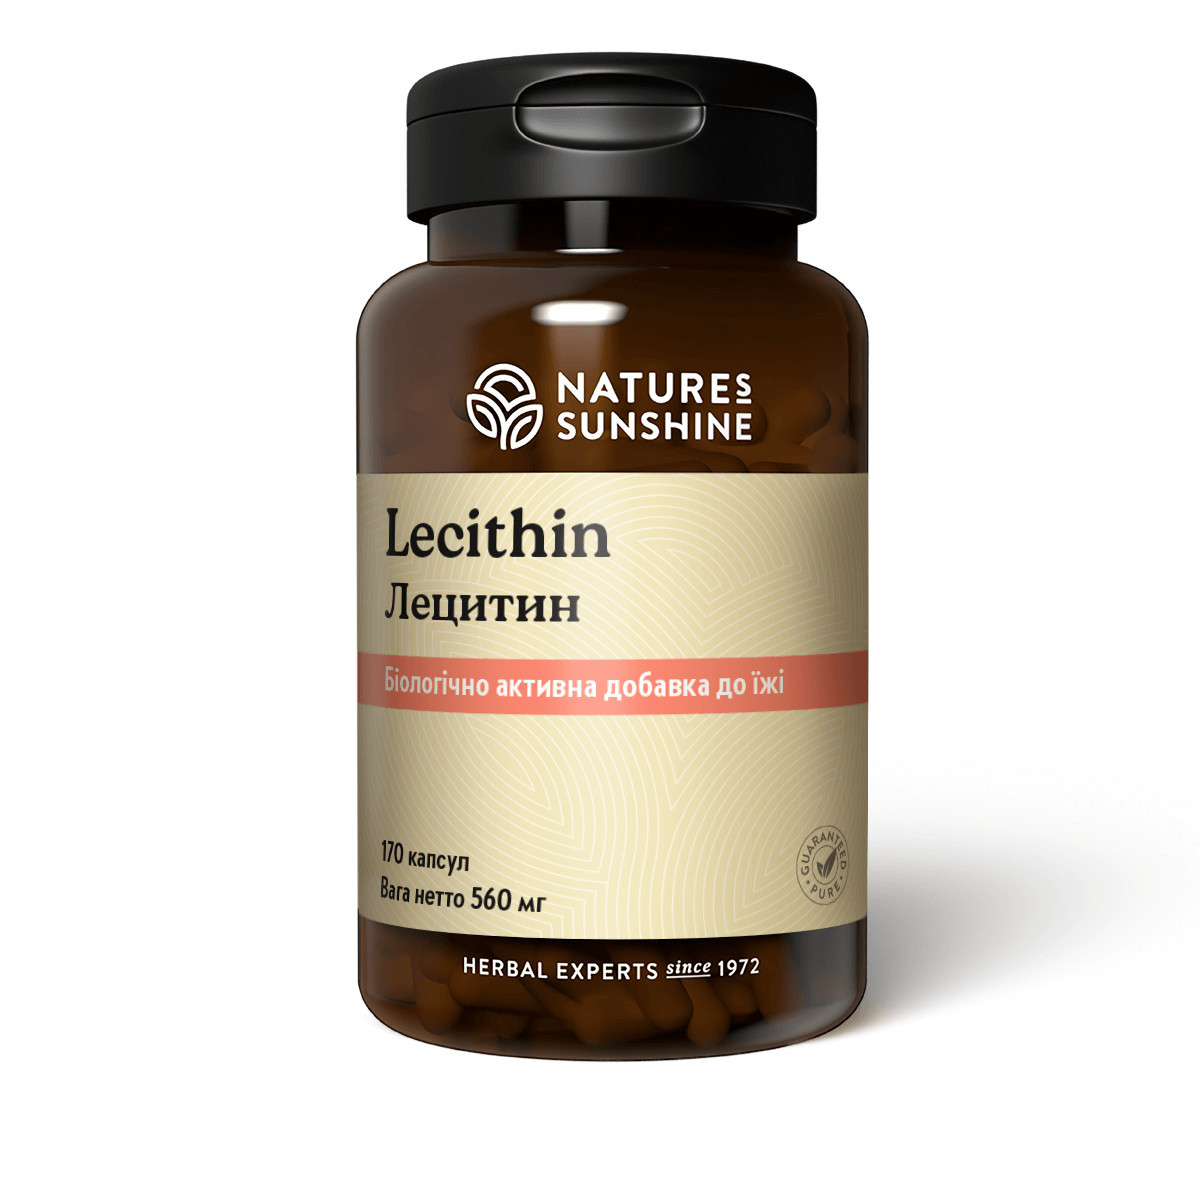 Лецитин, Lecithin, Nature's Sunshine Products, США, 170 капсул